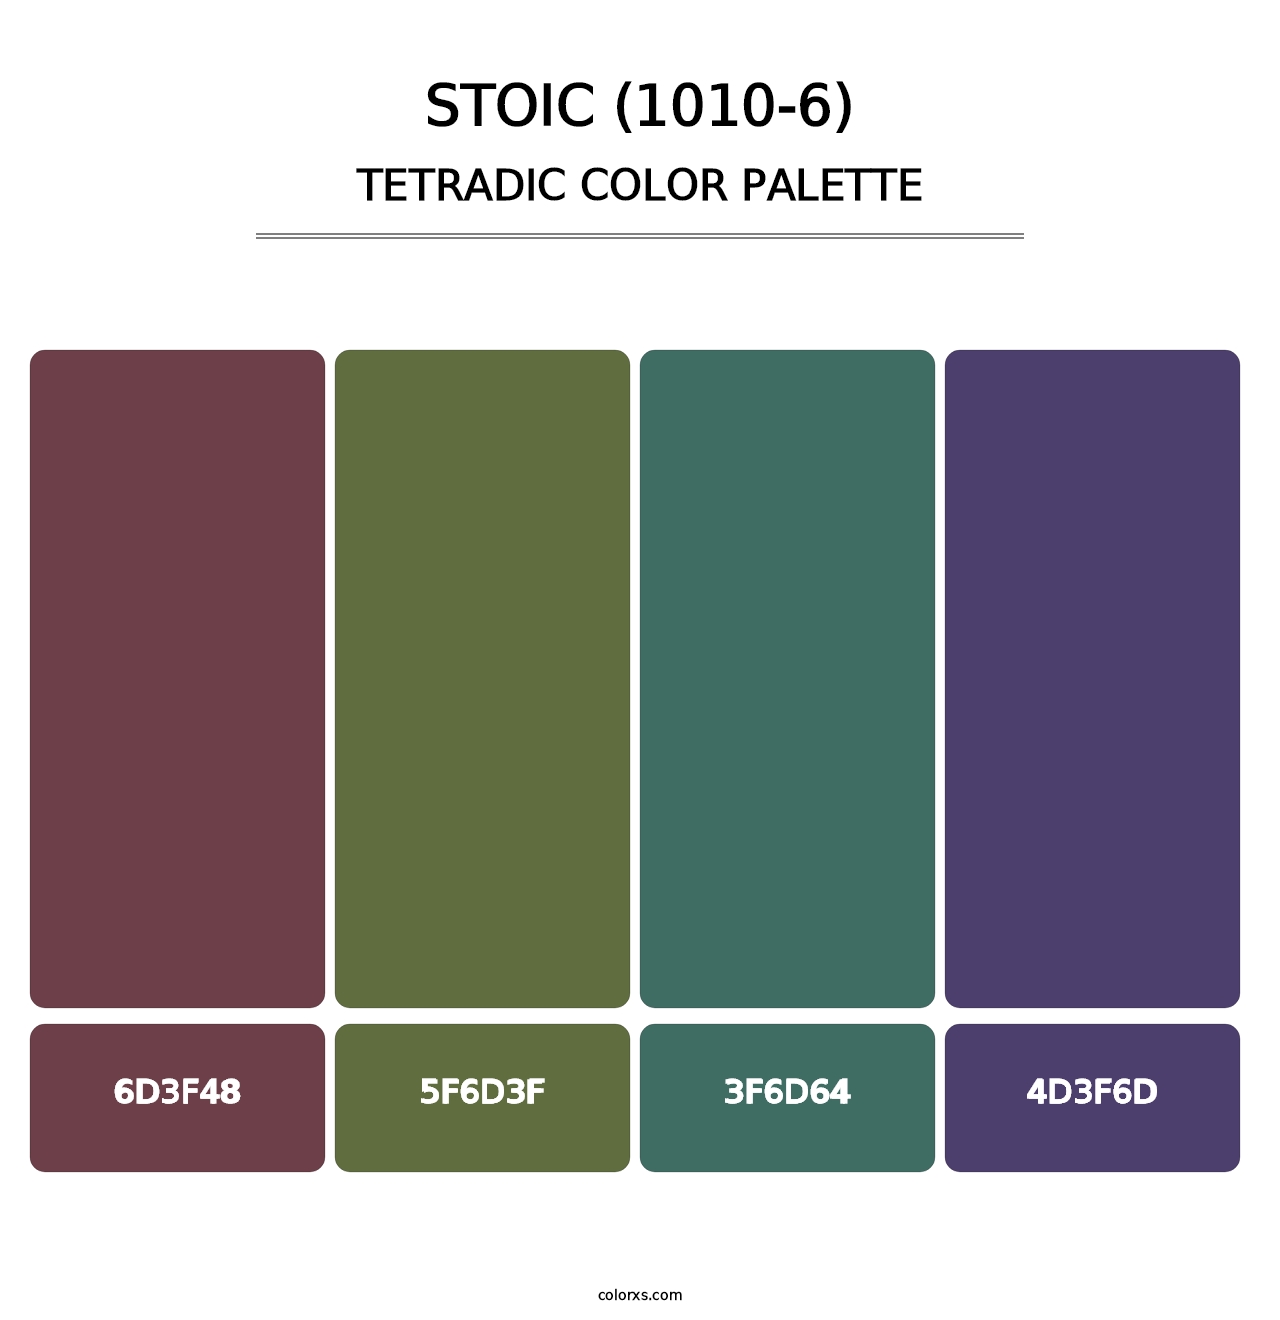 Stoic (1010-6) - Tetradic Color Palette